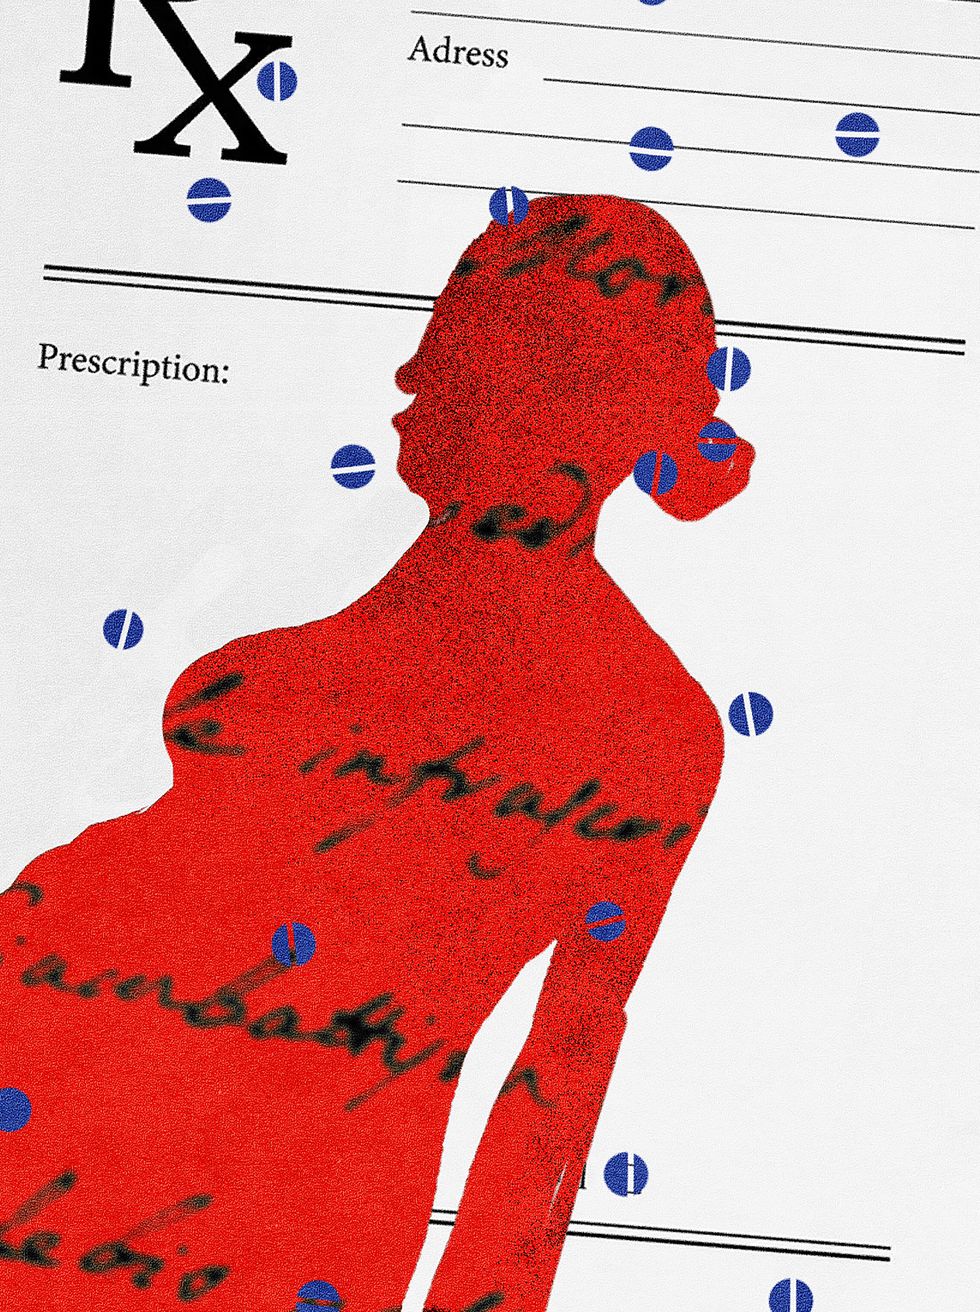 illustration on prescription pad